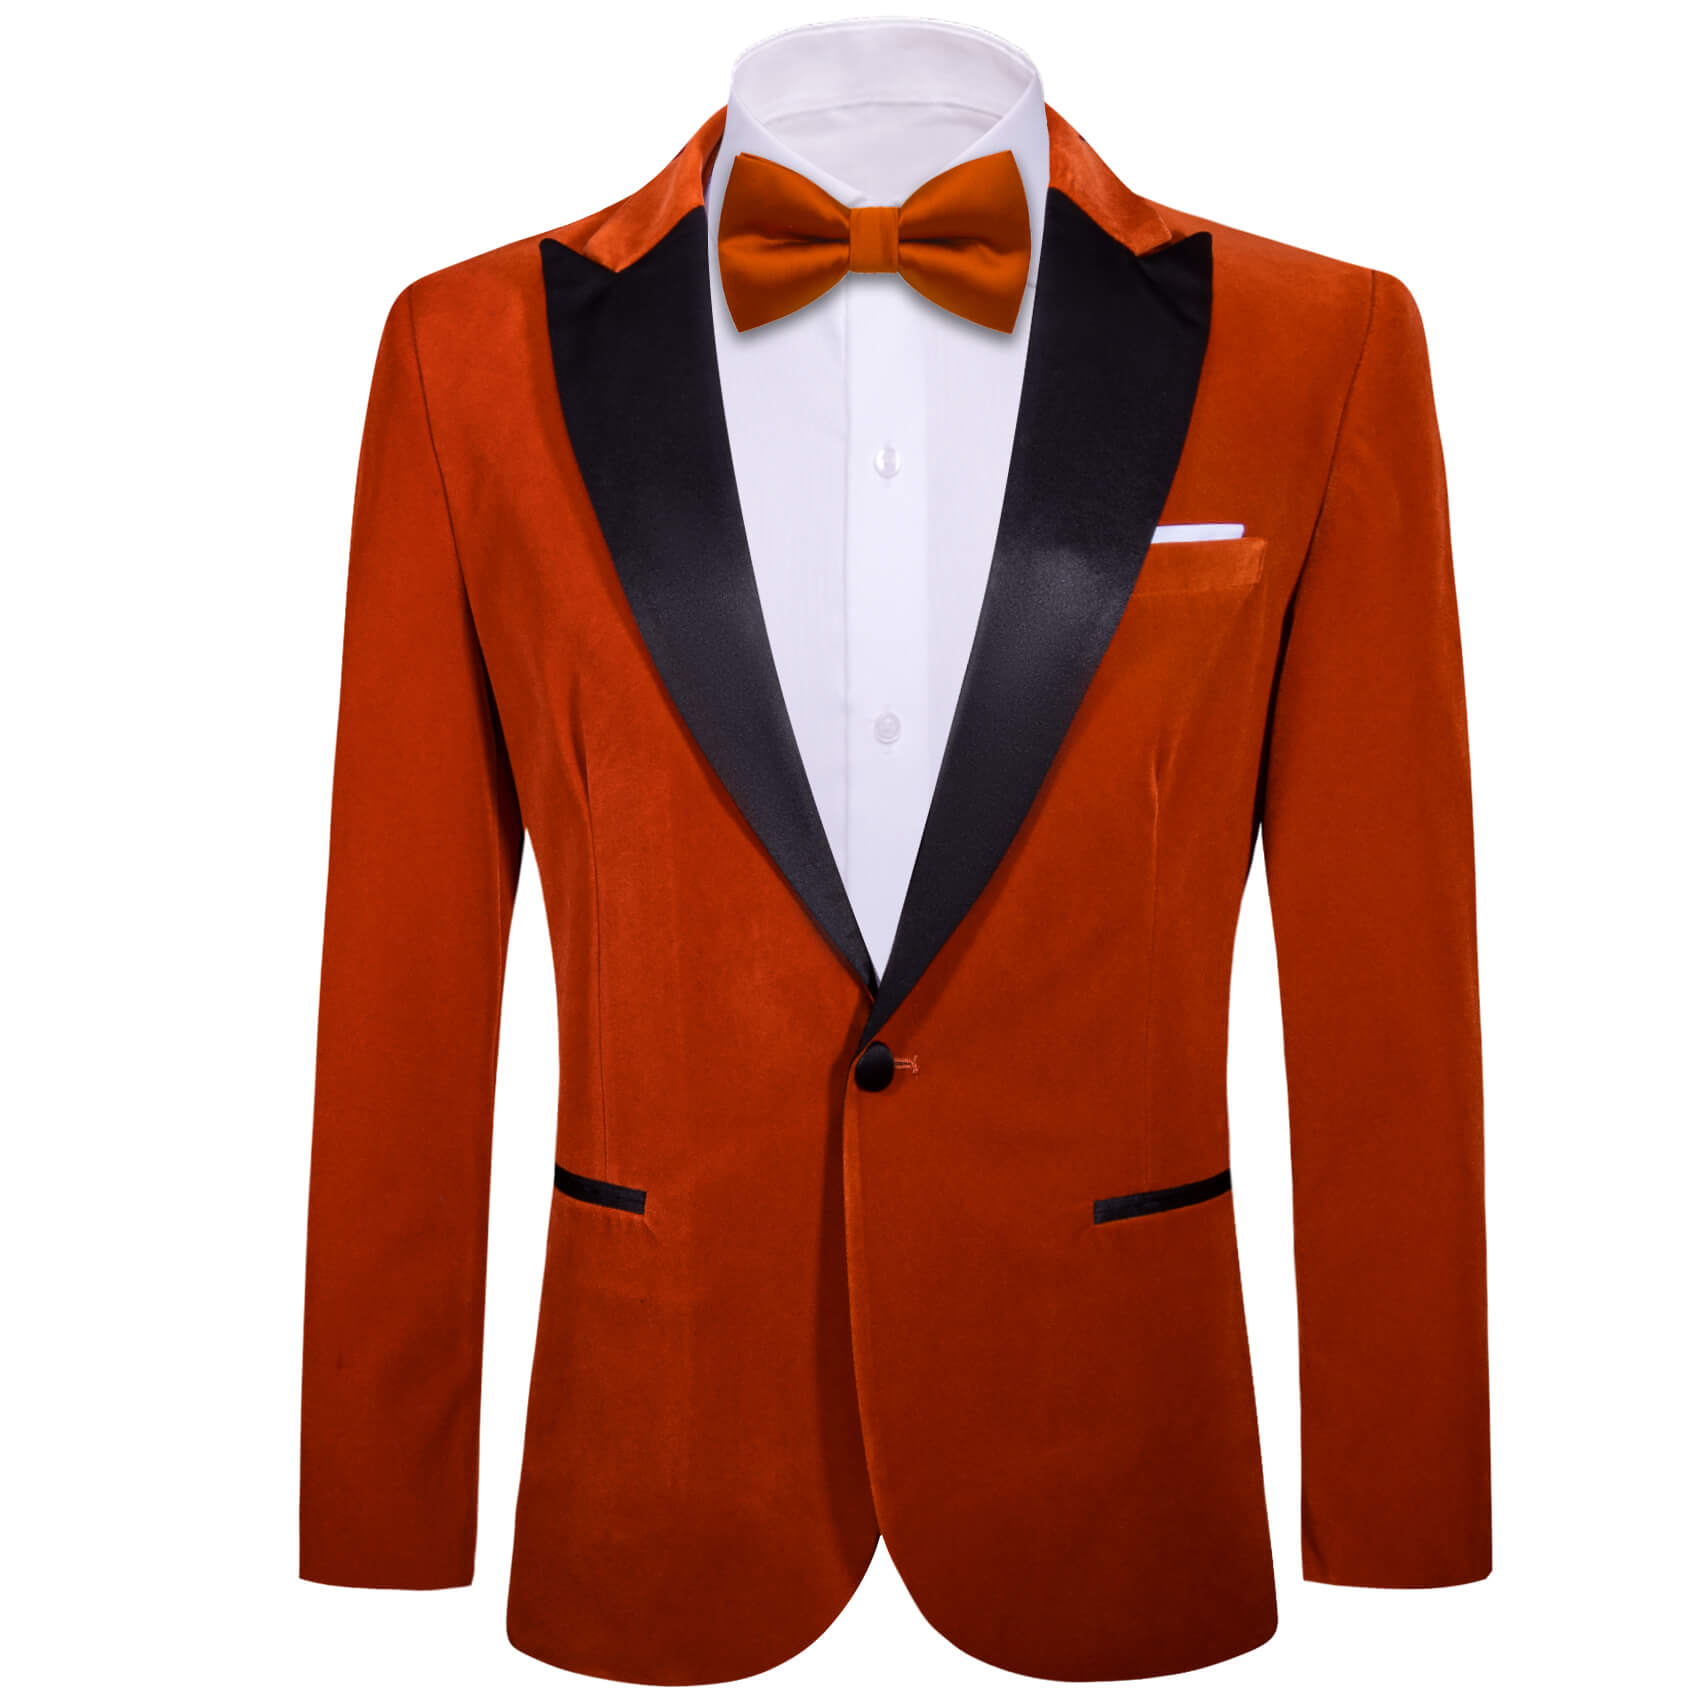 Barry.wang Peak Collar Suit Burnt Orange Solid Slim Silk Suit for Men